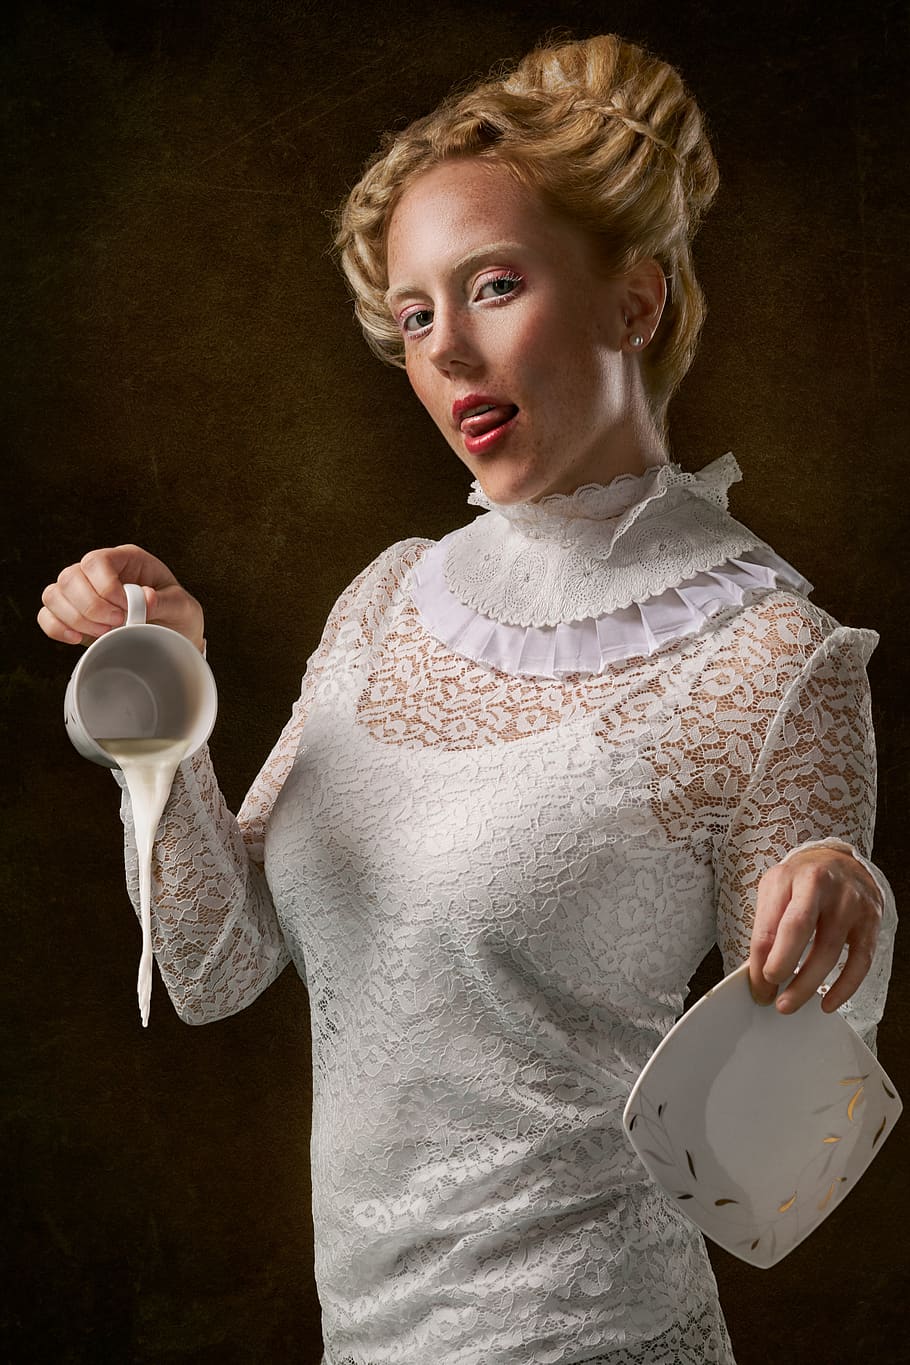 woman, cup, milk, portrait, mug, hands, beverage, saucer, plate, blonde